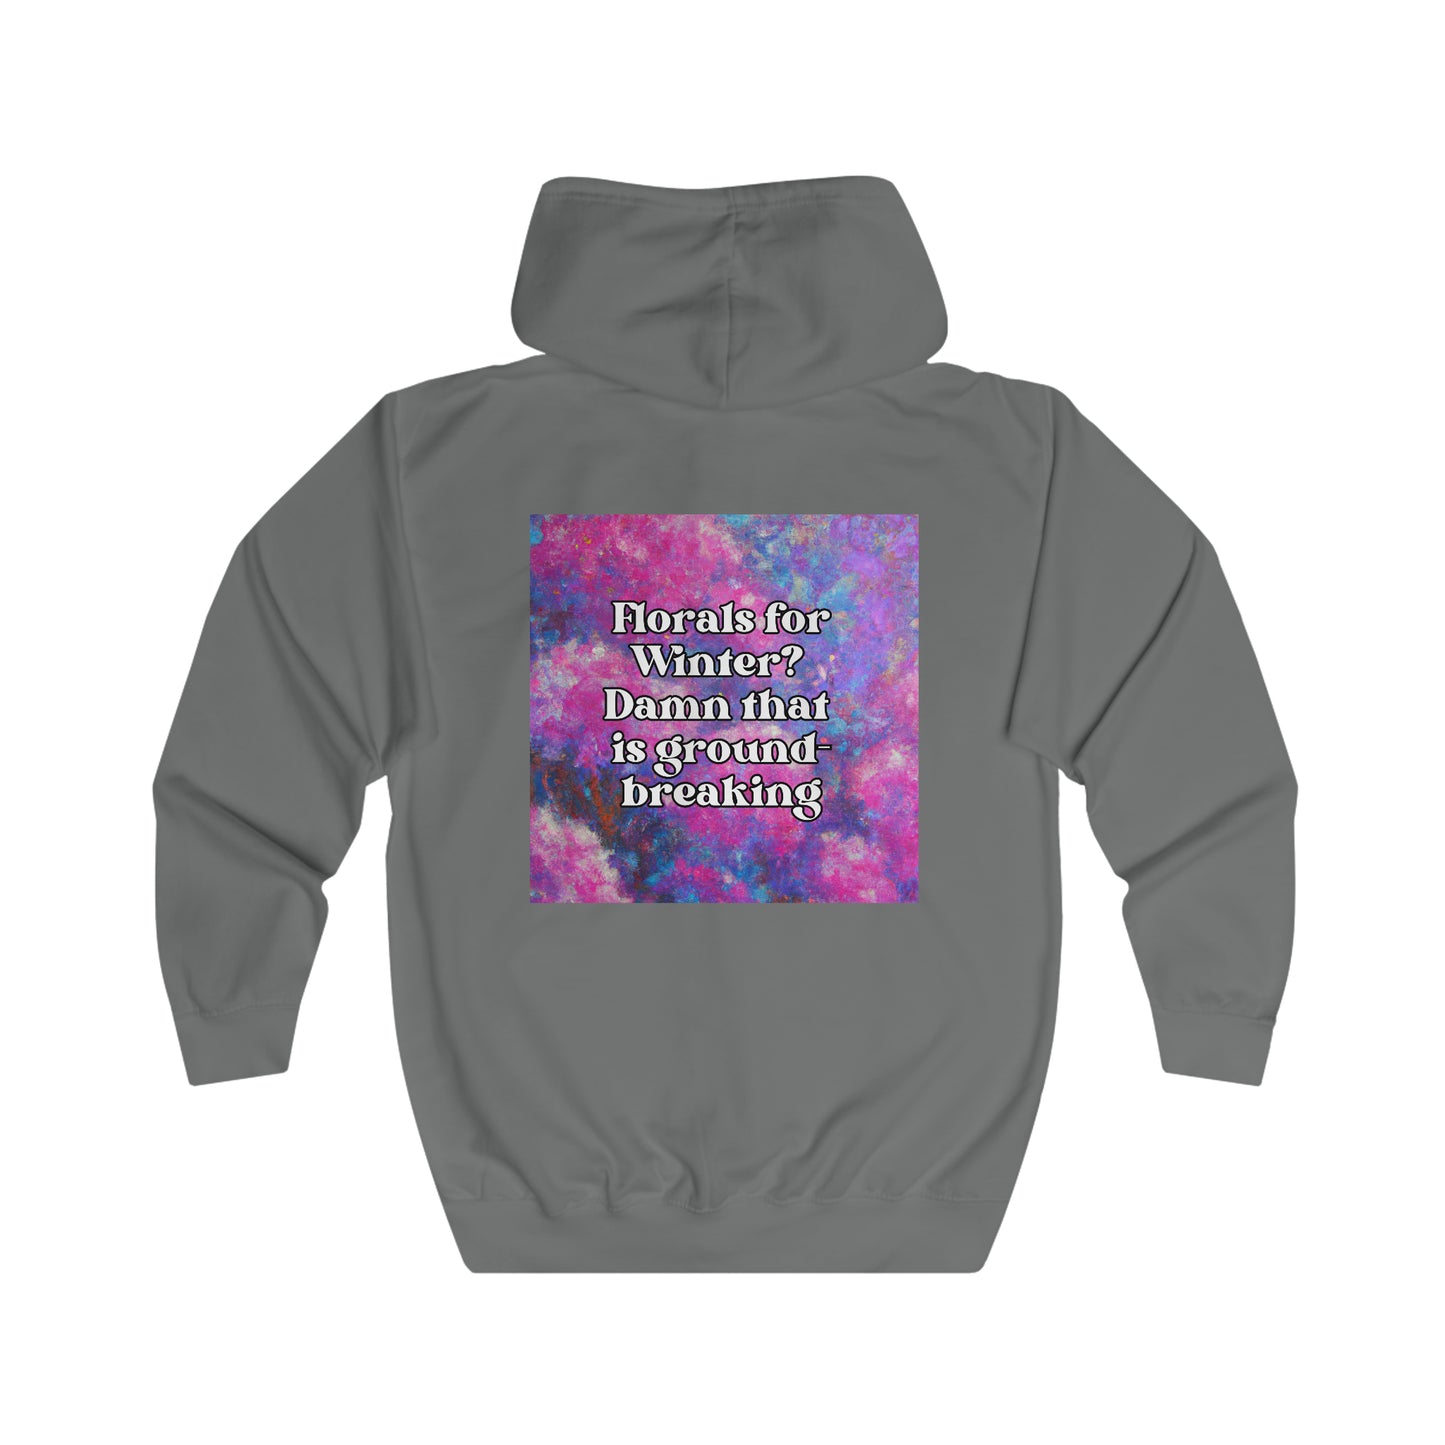 Florals for Winter? Sh*t that is Groundbreaking - full zip hoodie